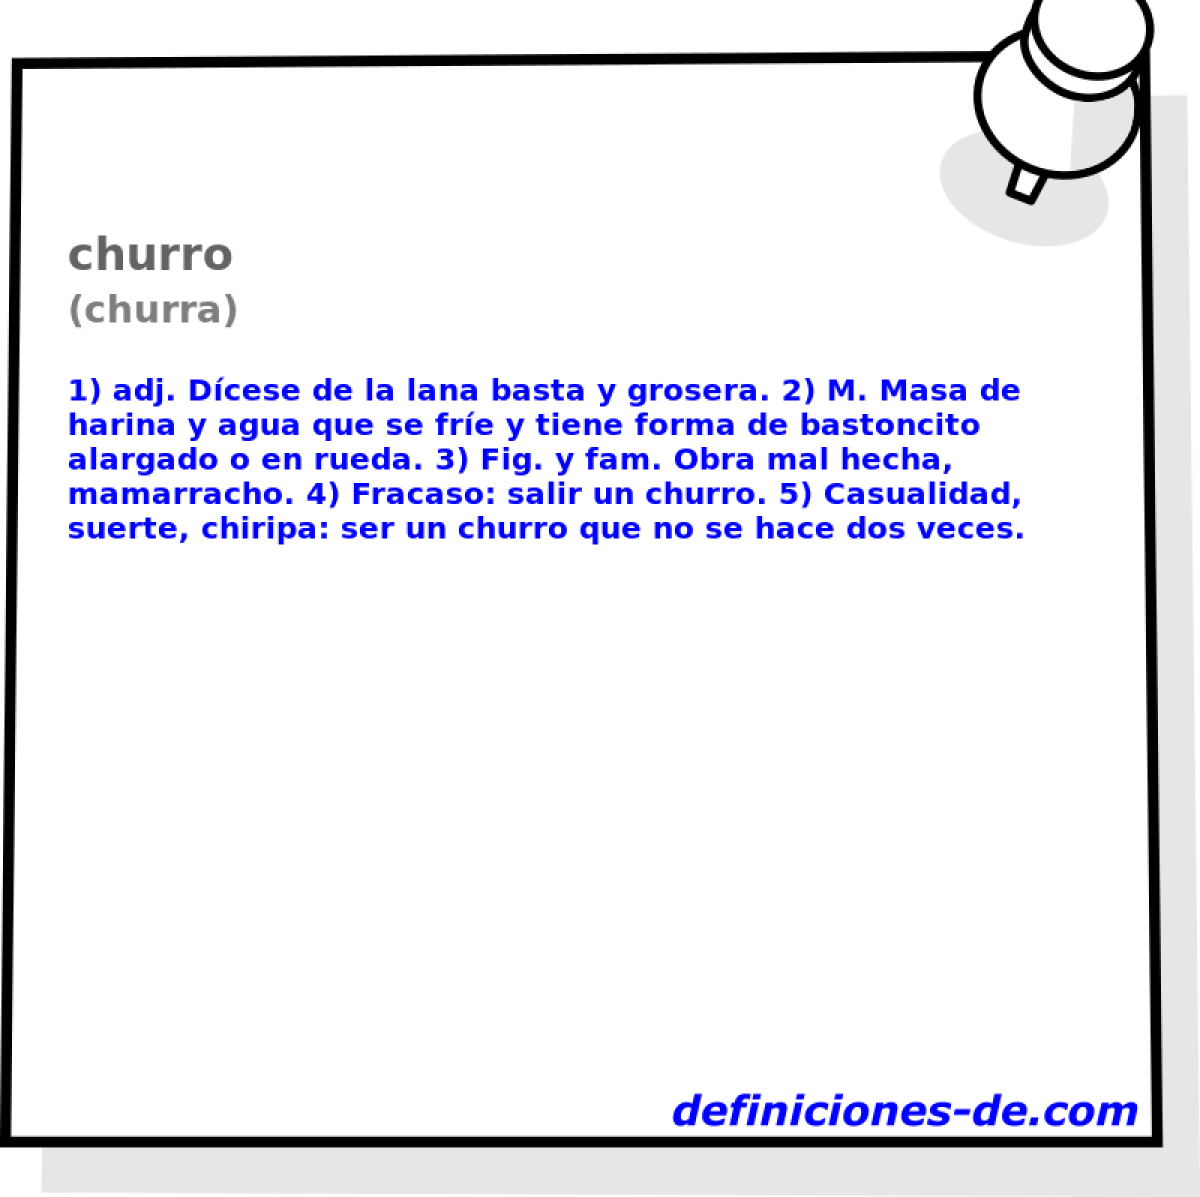 churro (churra)